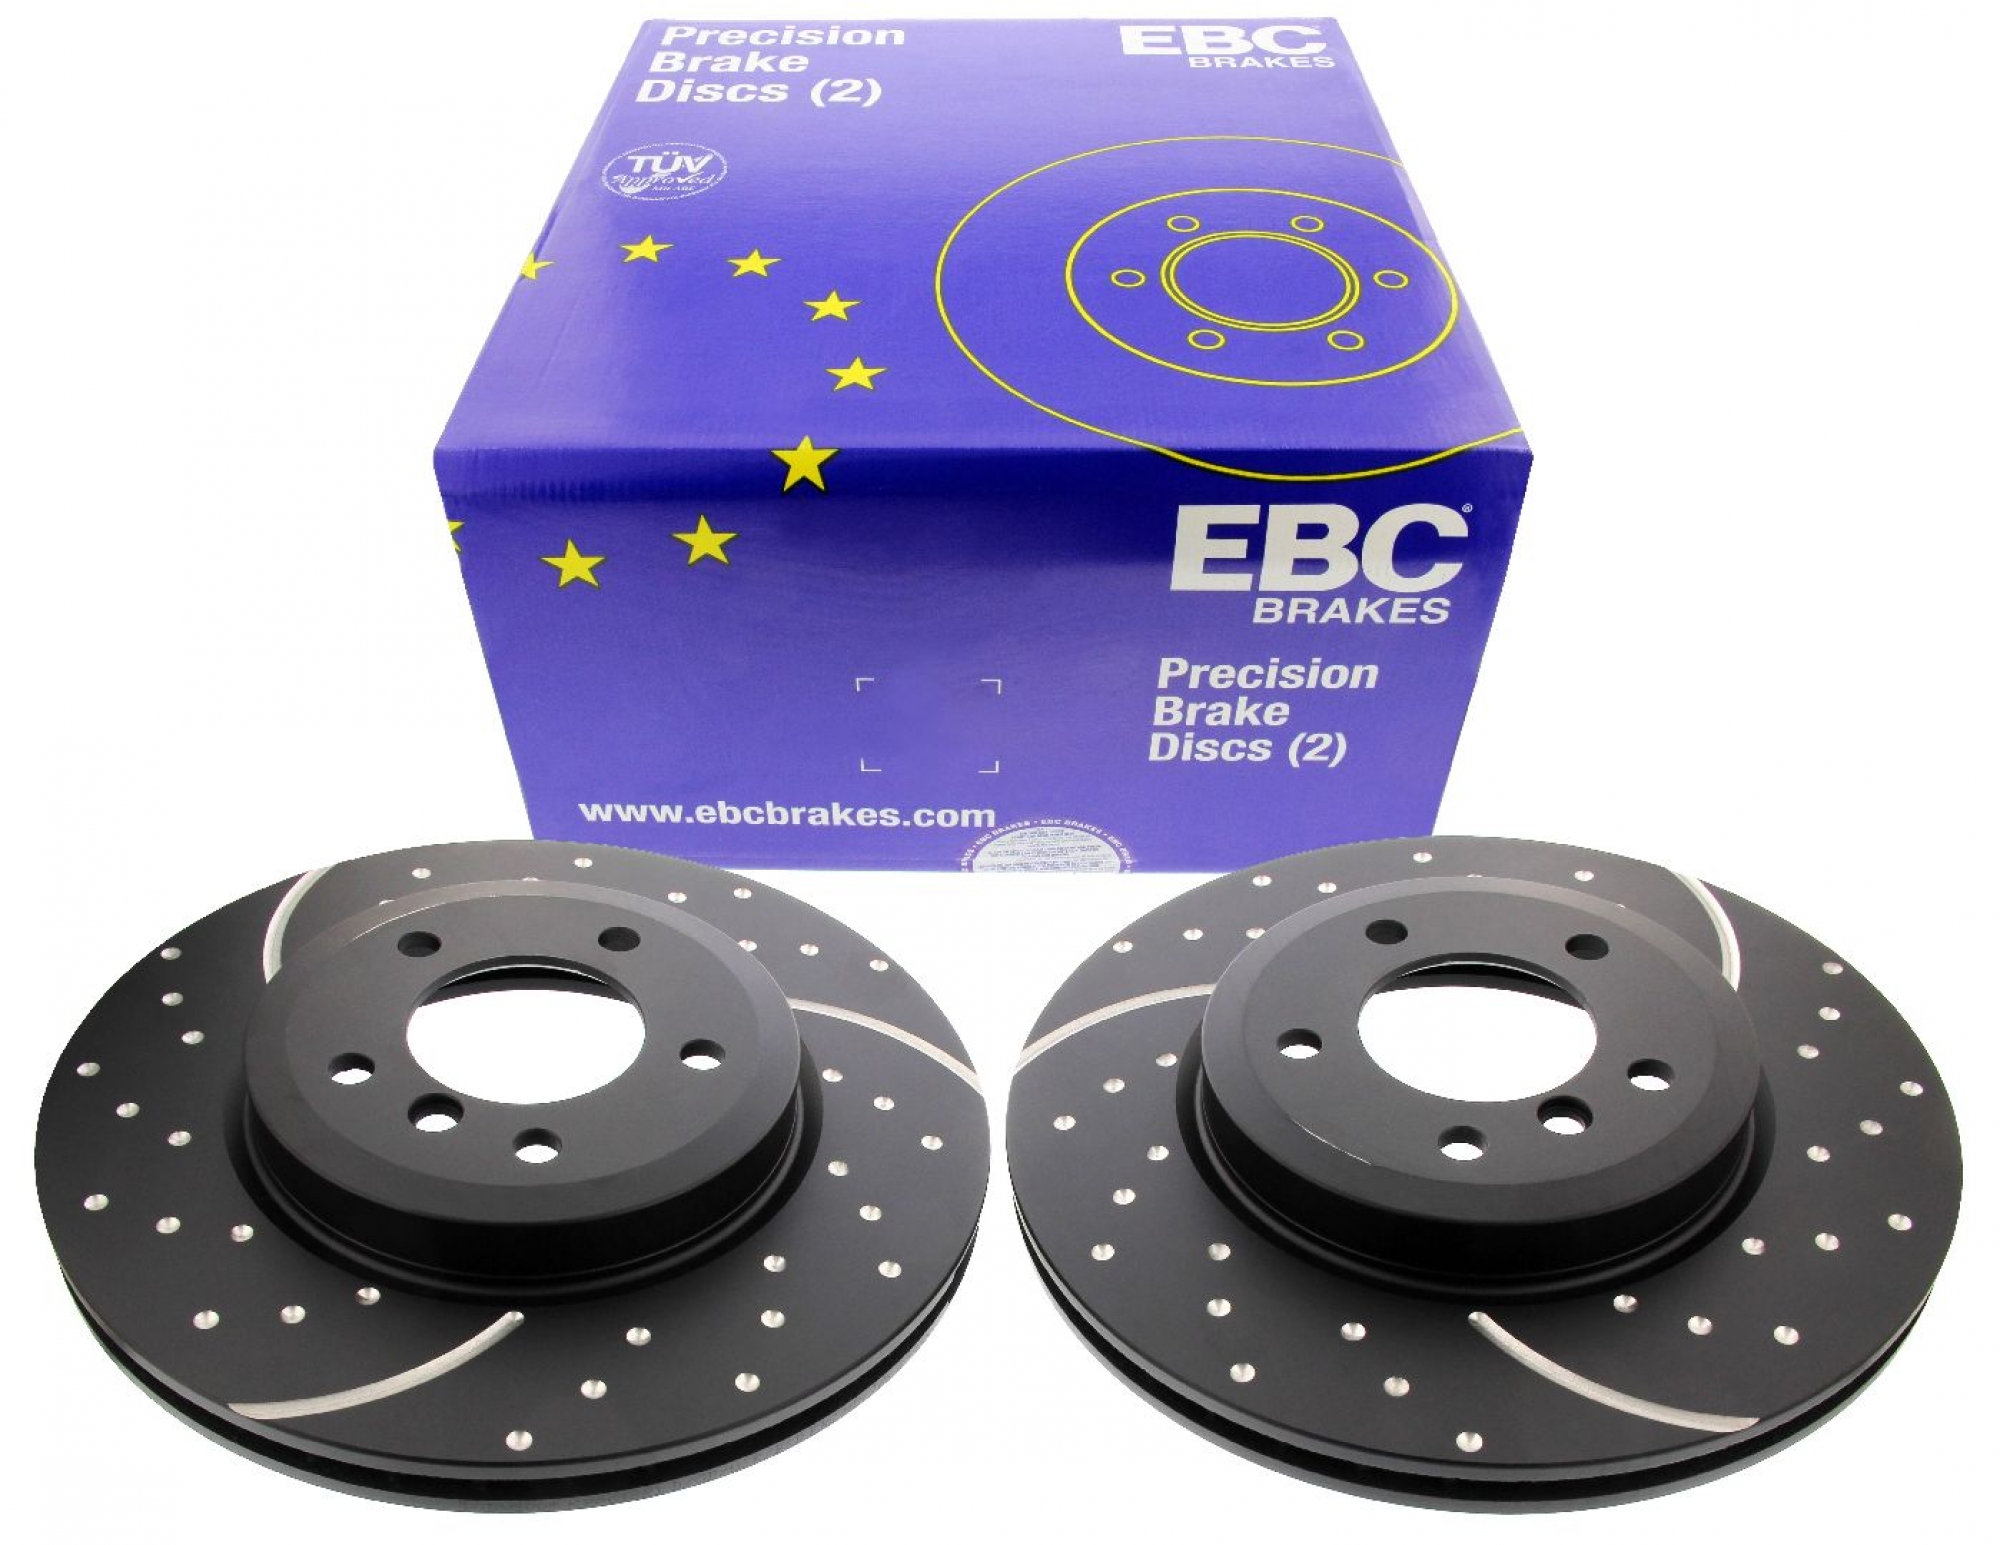 EBC-Bremsscheiben, Turbo Groove Disc Black (2-teilig), VA, BMW Z4, 3